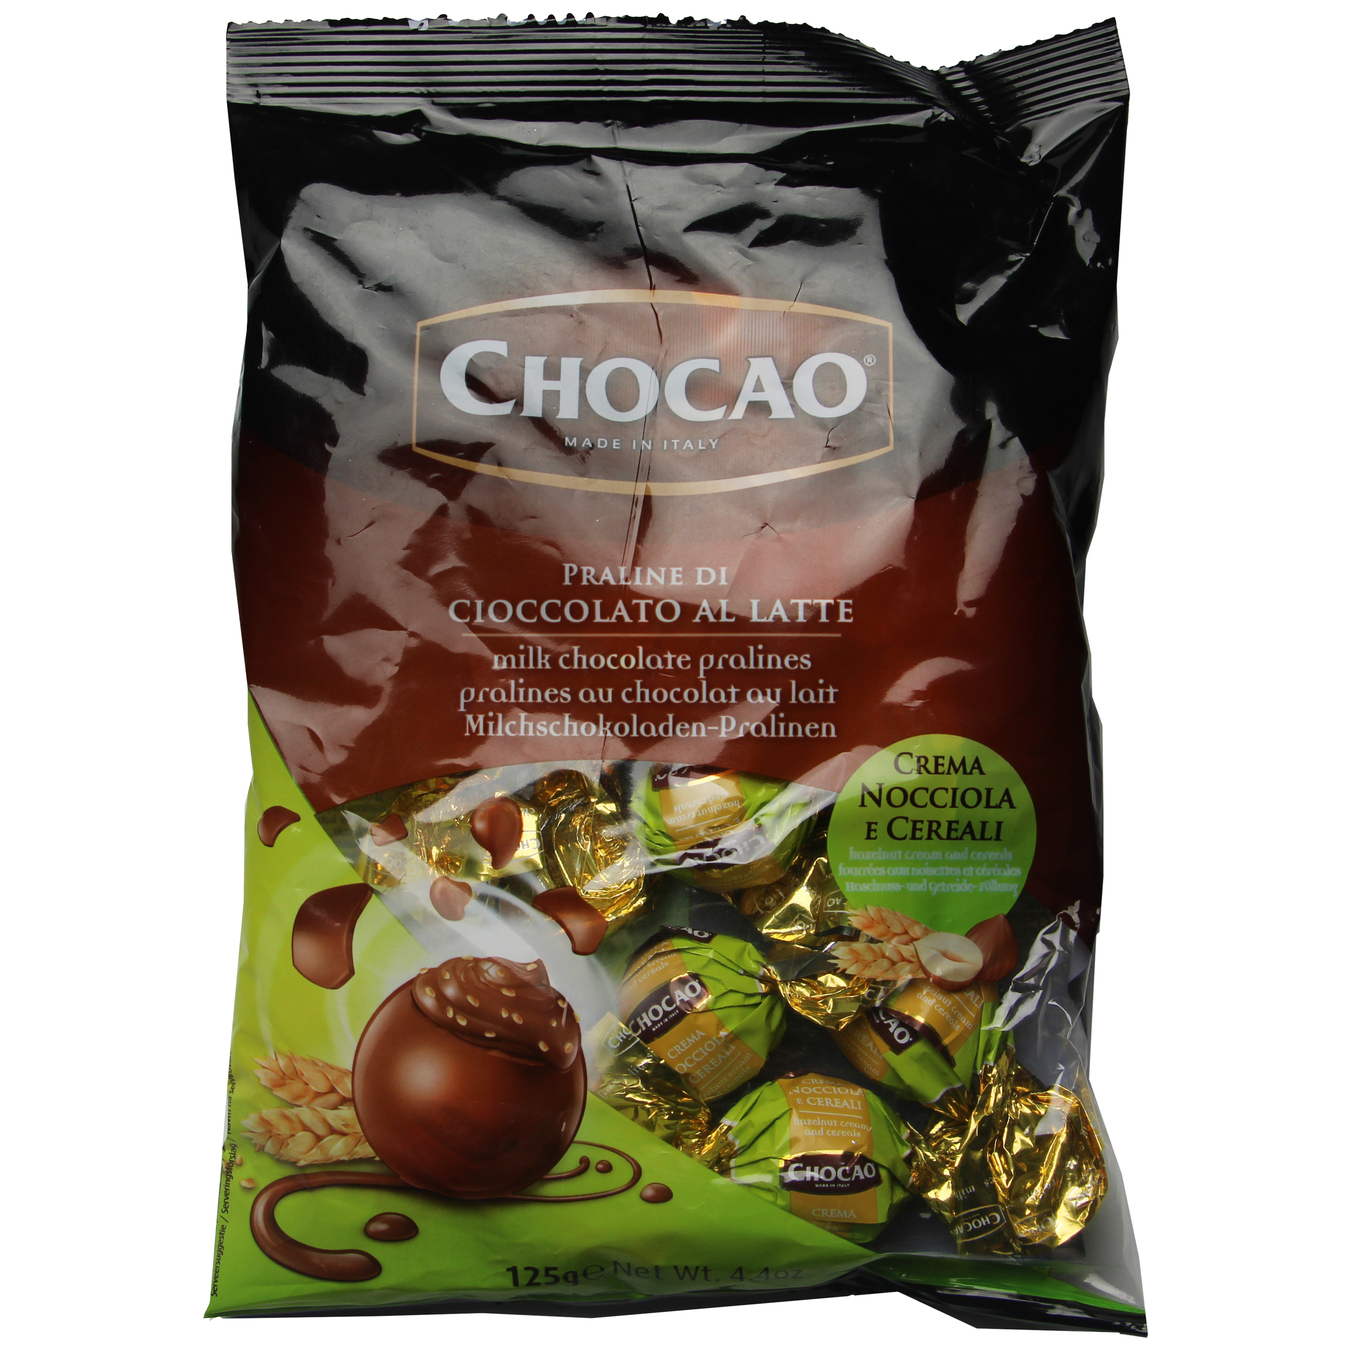 Candies Vergani Chocаo with Hazelnut and Cereals in Milk Chocolate 125g